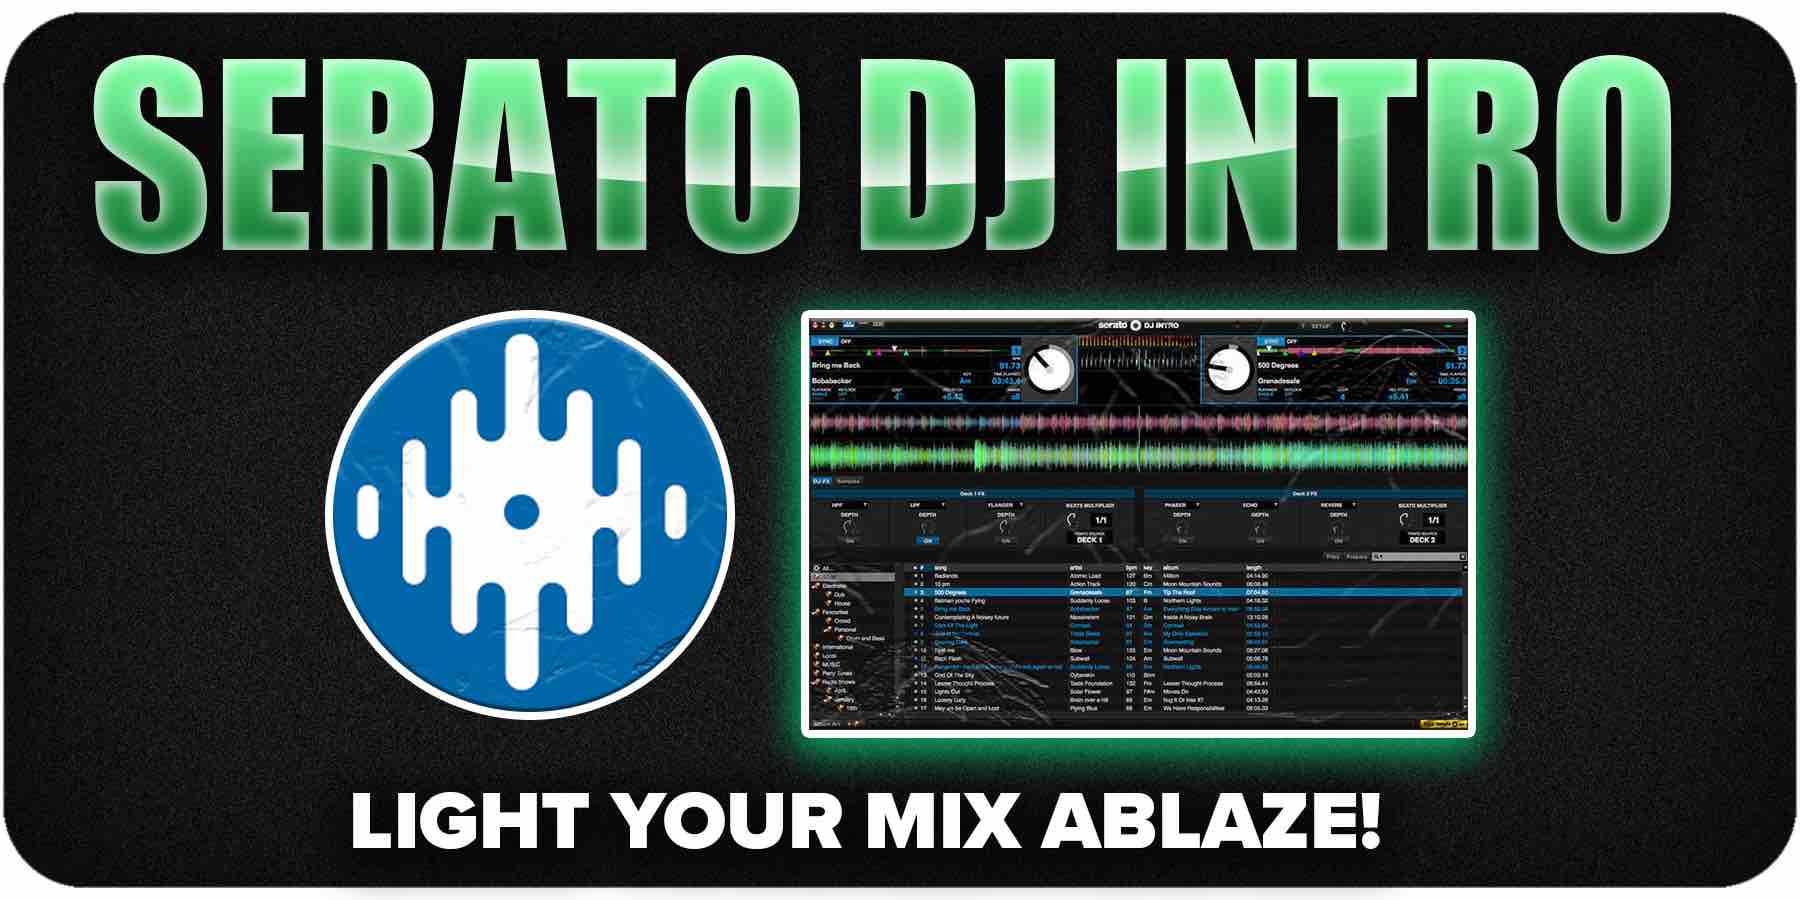 Serato DJ Intro Mixing Software